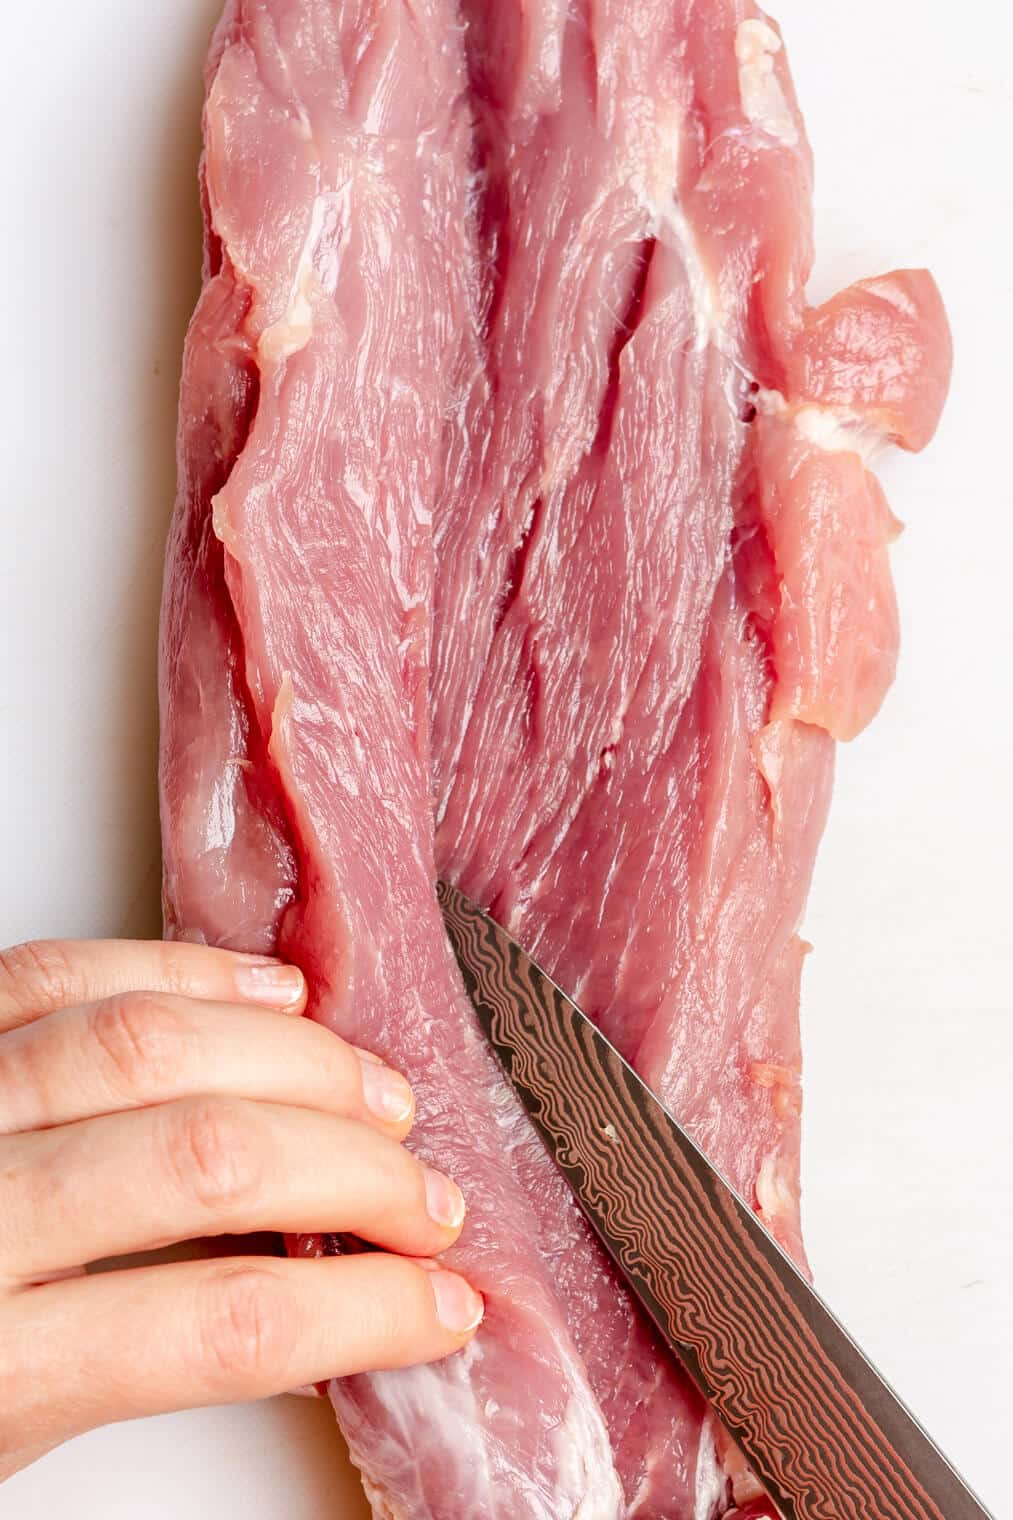 Hand holding pork tenderloin and knife slicing through the middle of the pork tenderloin lengthwise.